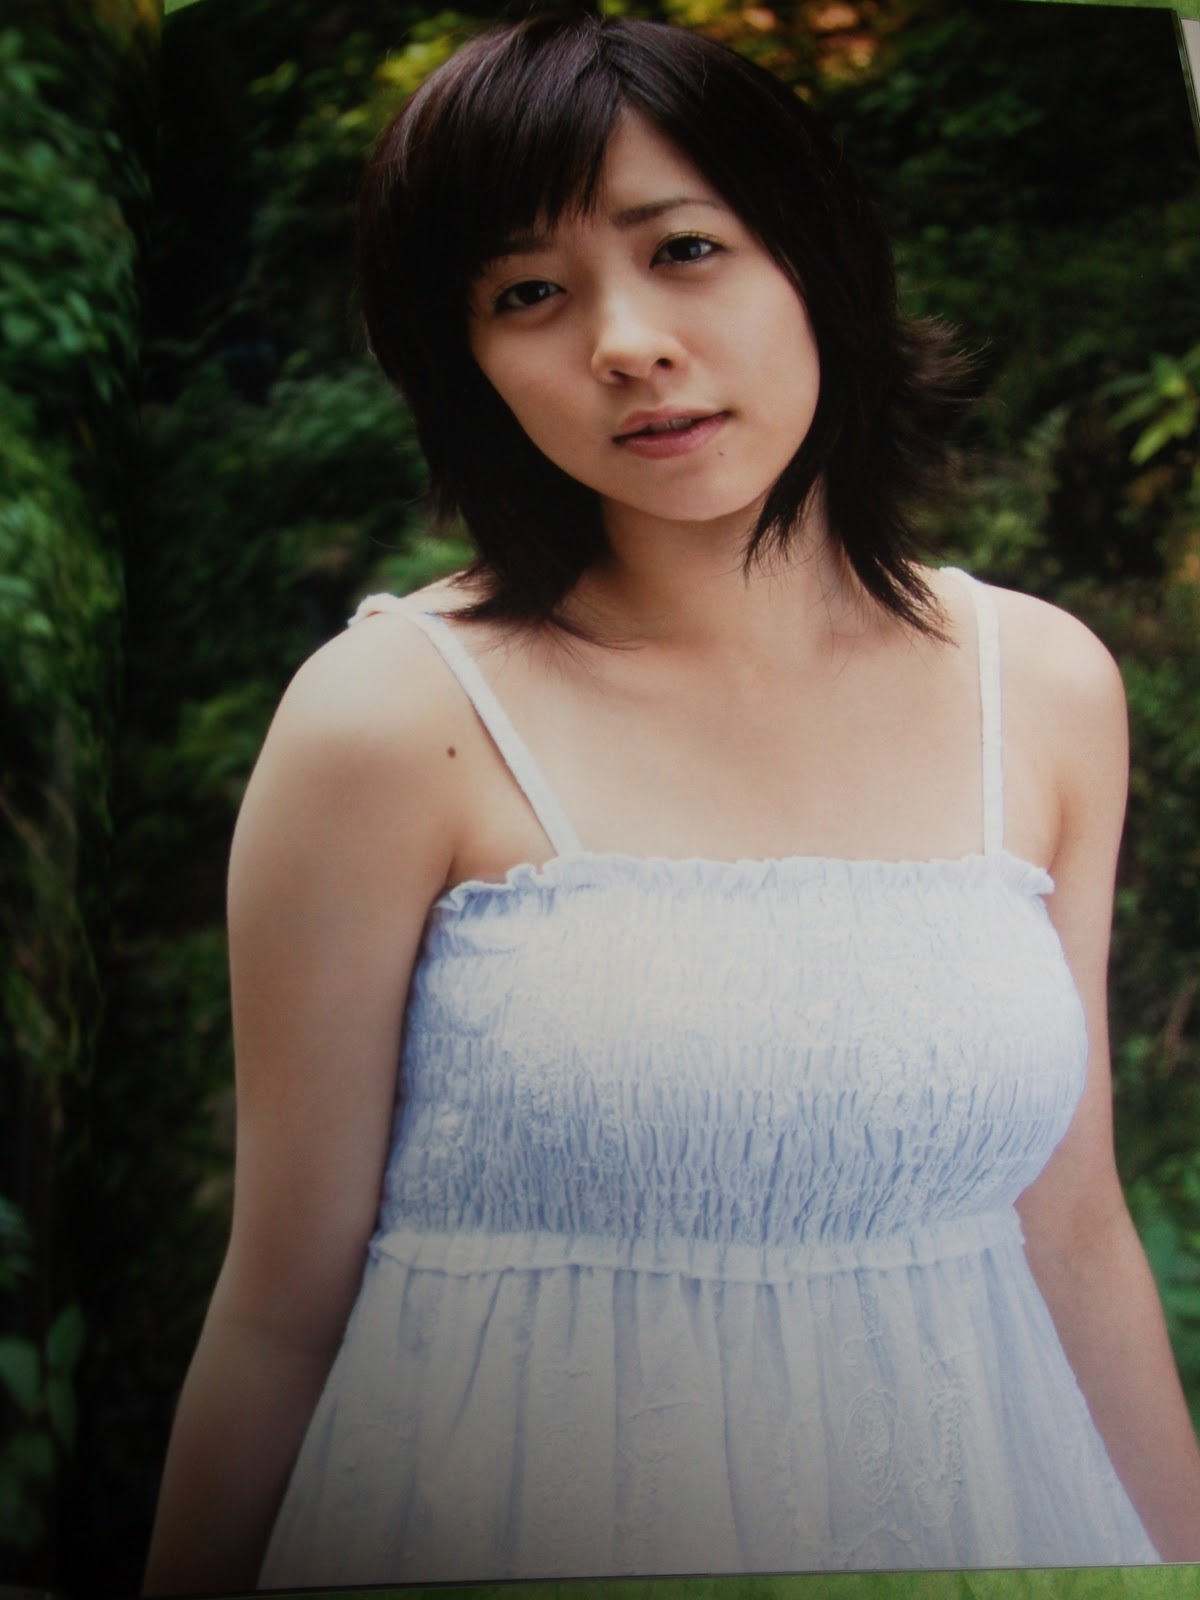 Yuka Hayami Marchen Complete Free Download Nude Photo Gallery